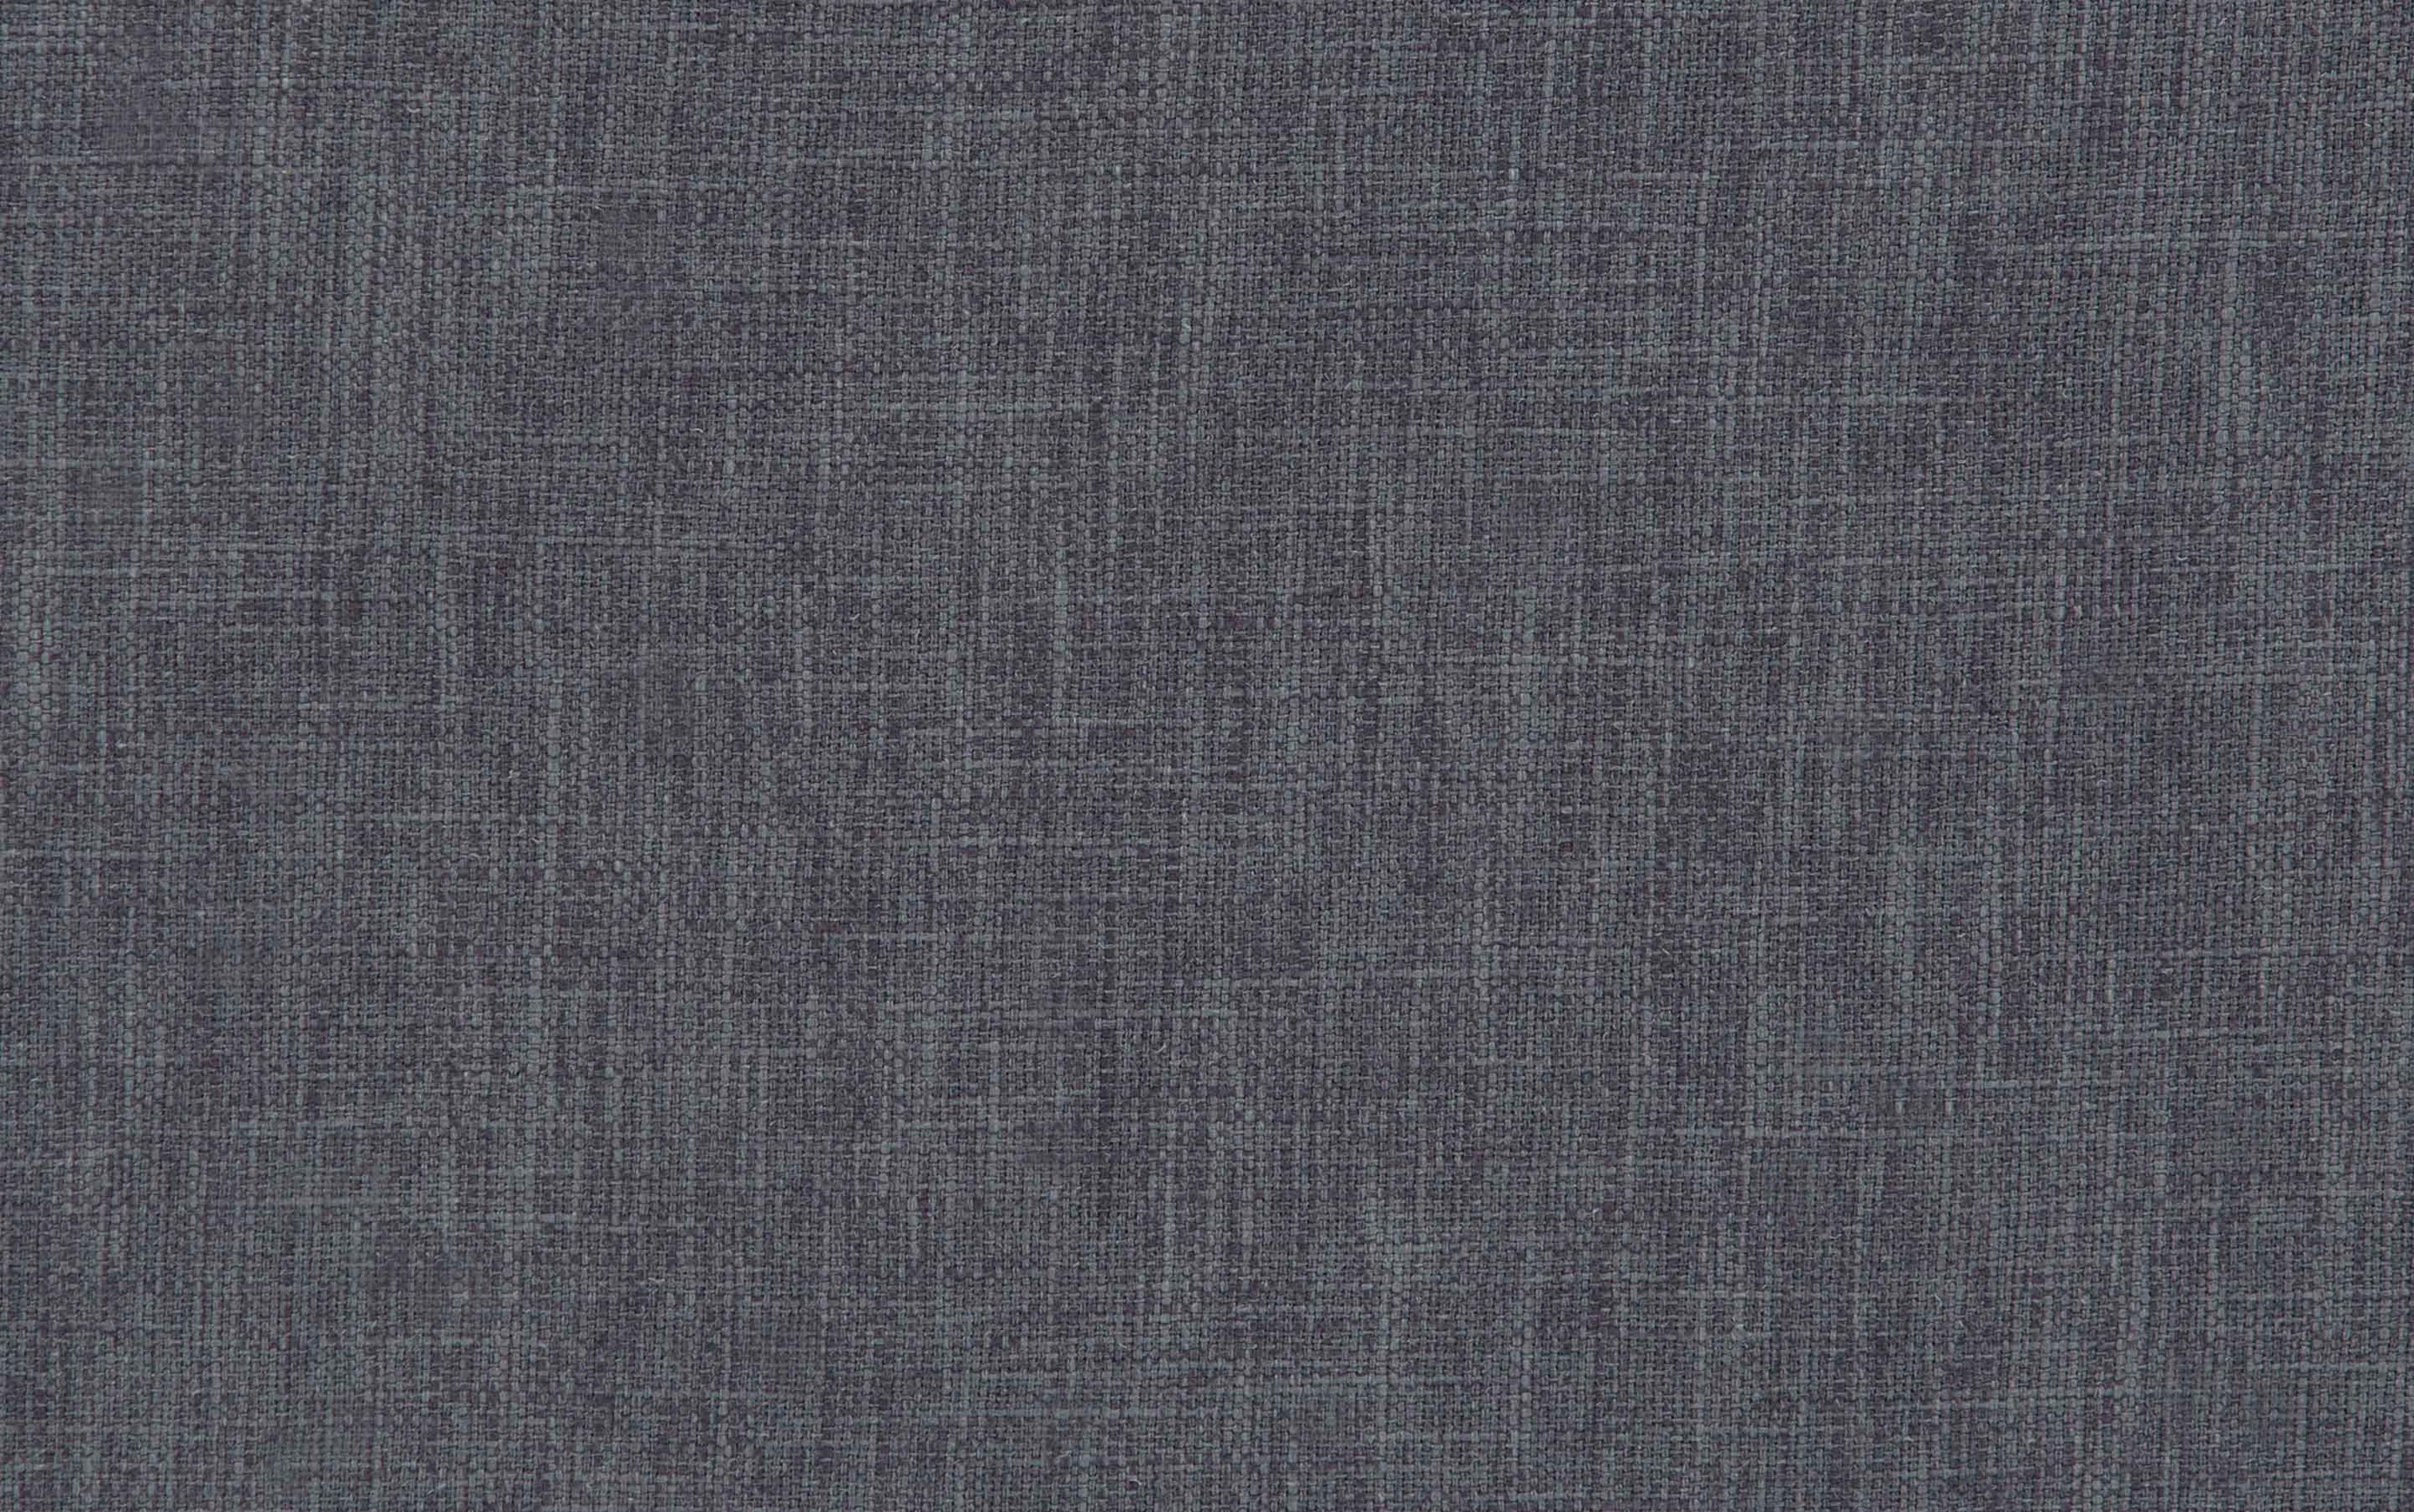 Slate Grey Linen Style Fabric | Harrison Small Square Coffee Table Storage Ottoman